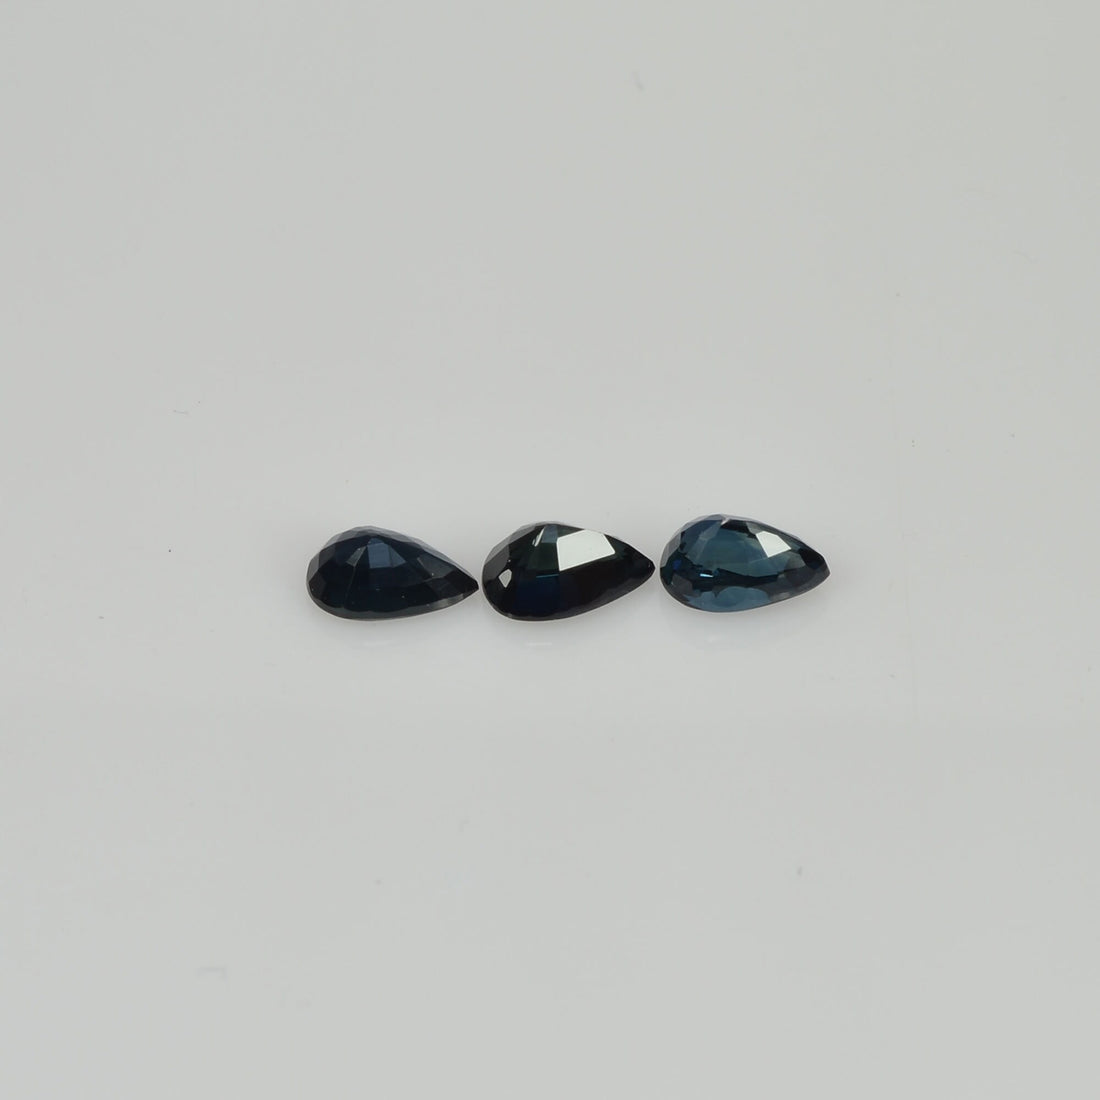 6x4 mm Natural Calibrated Blue Sapphire Loose Gemstone Pear Cut